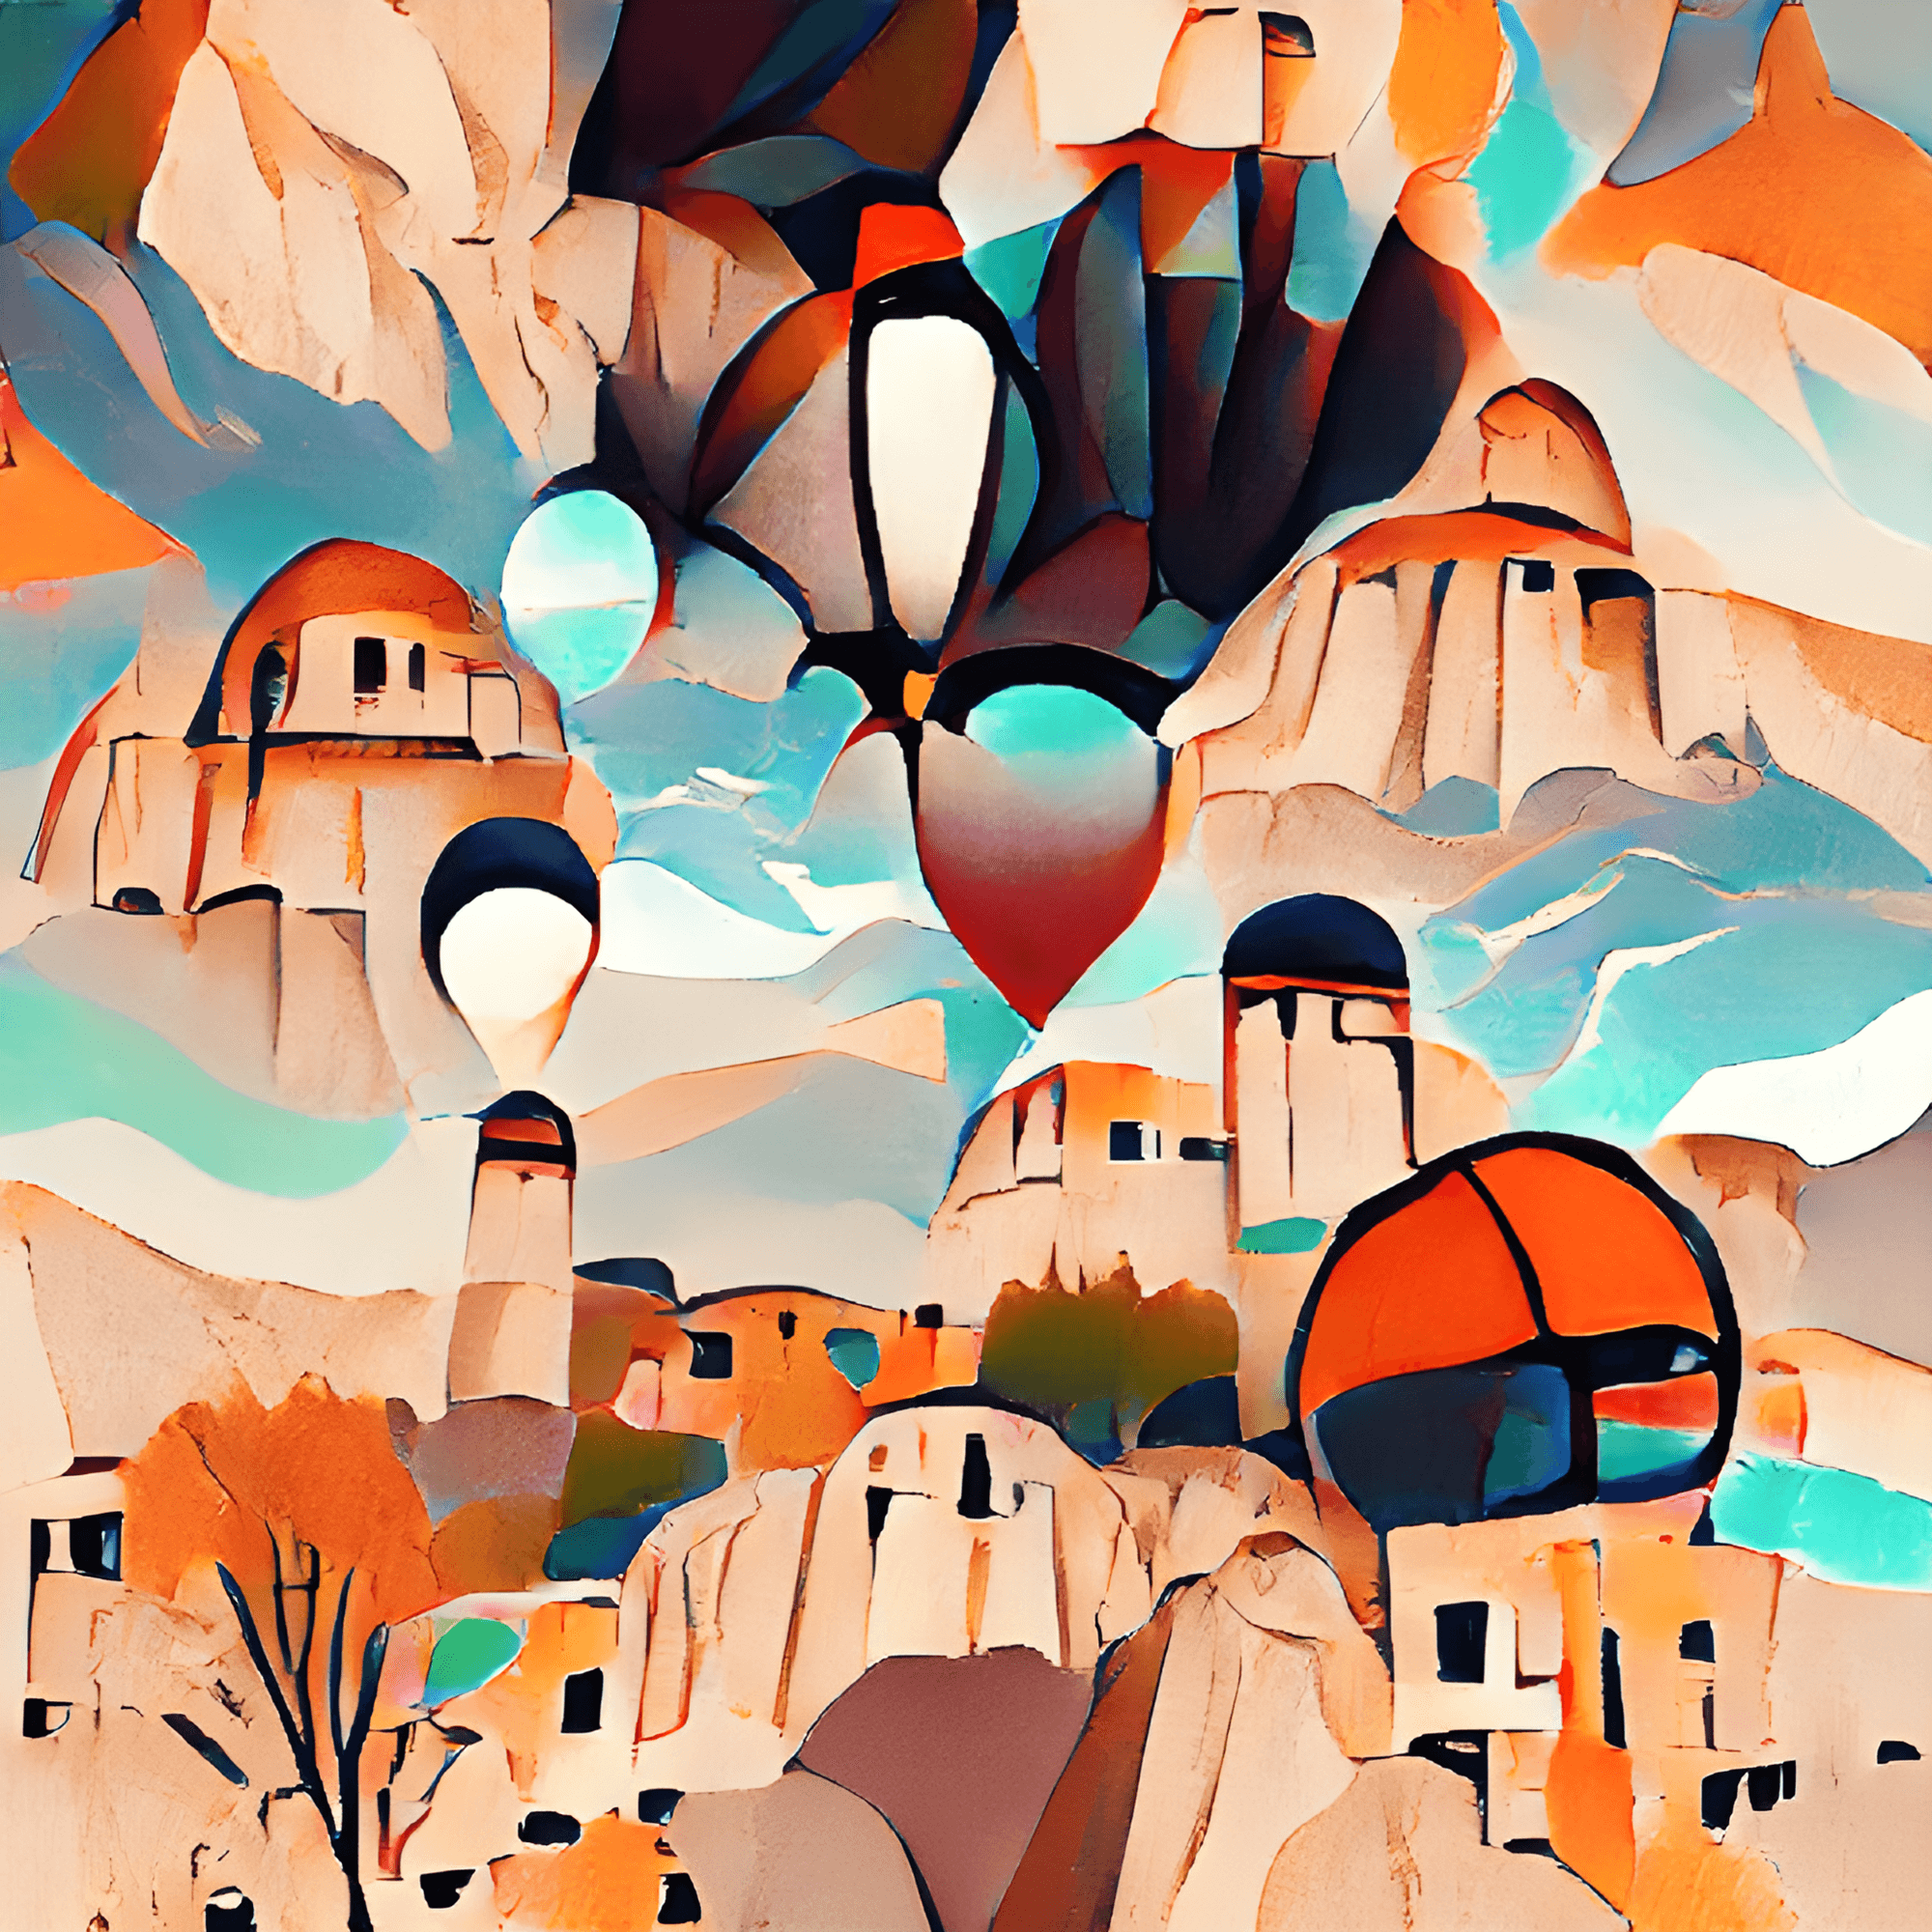 Cappadocia as Fantatsy Land